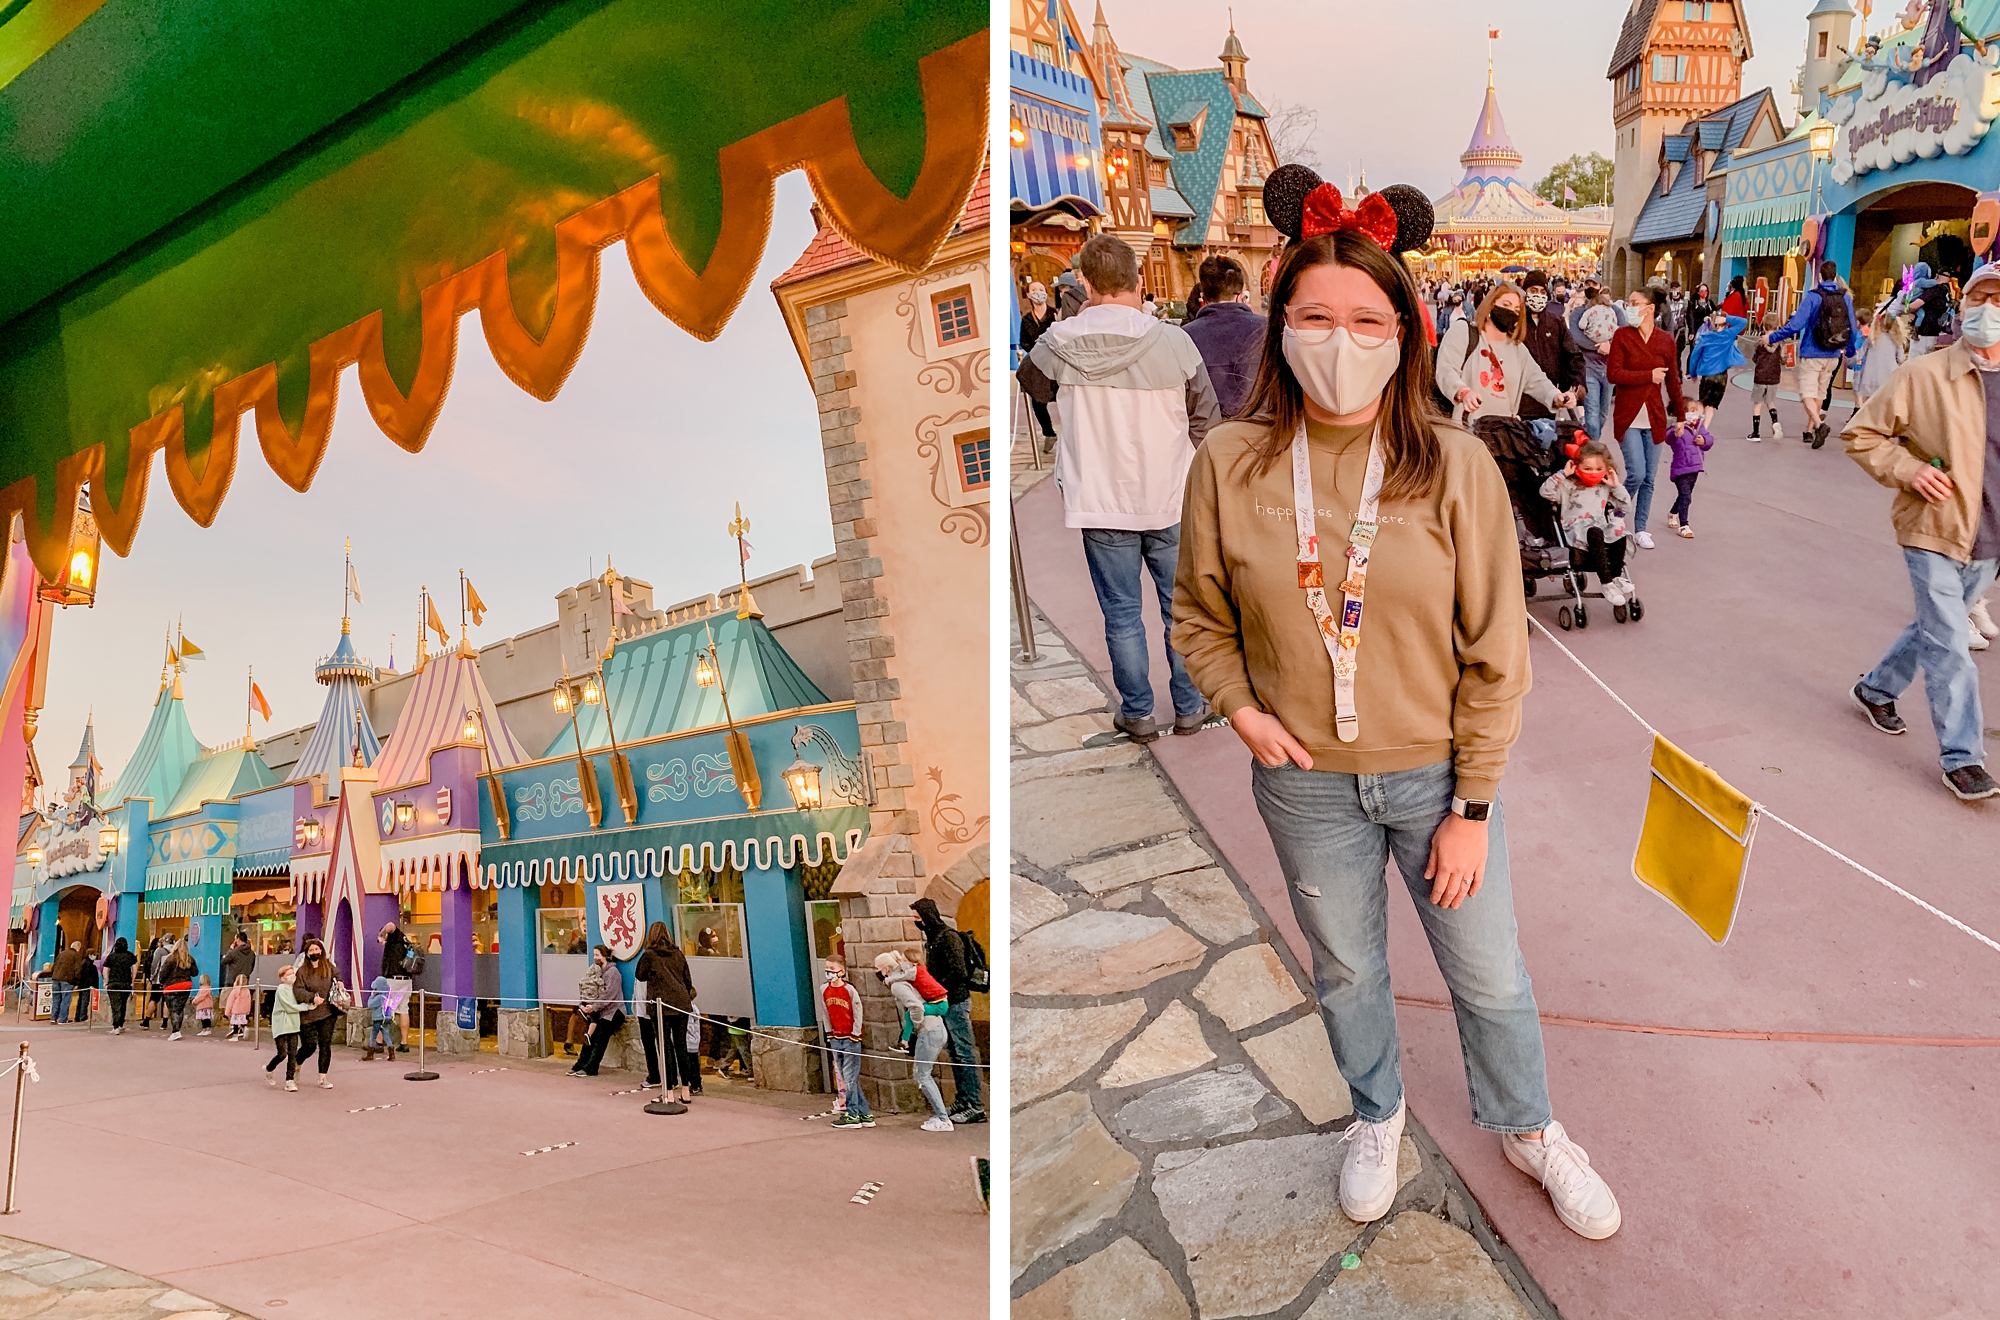 It's a Small World ride at Walt Disney World